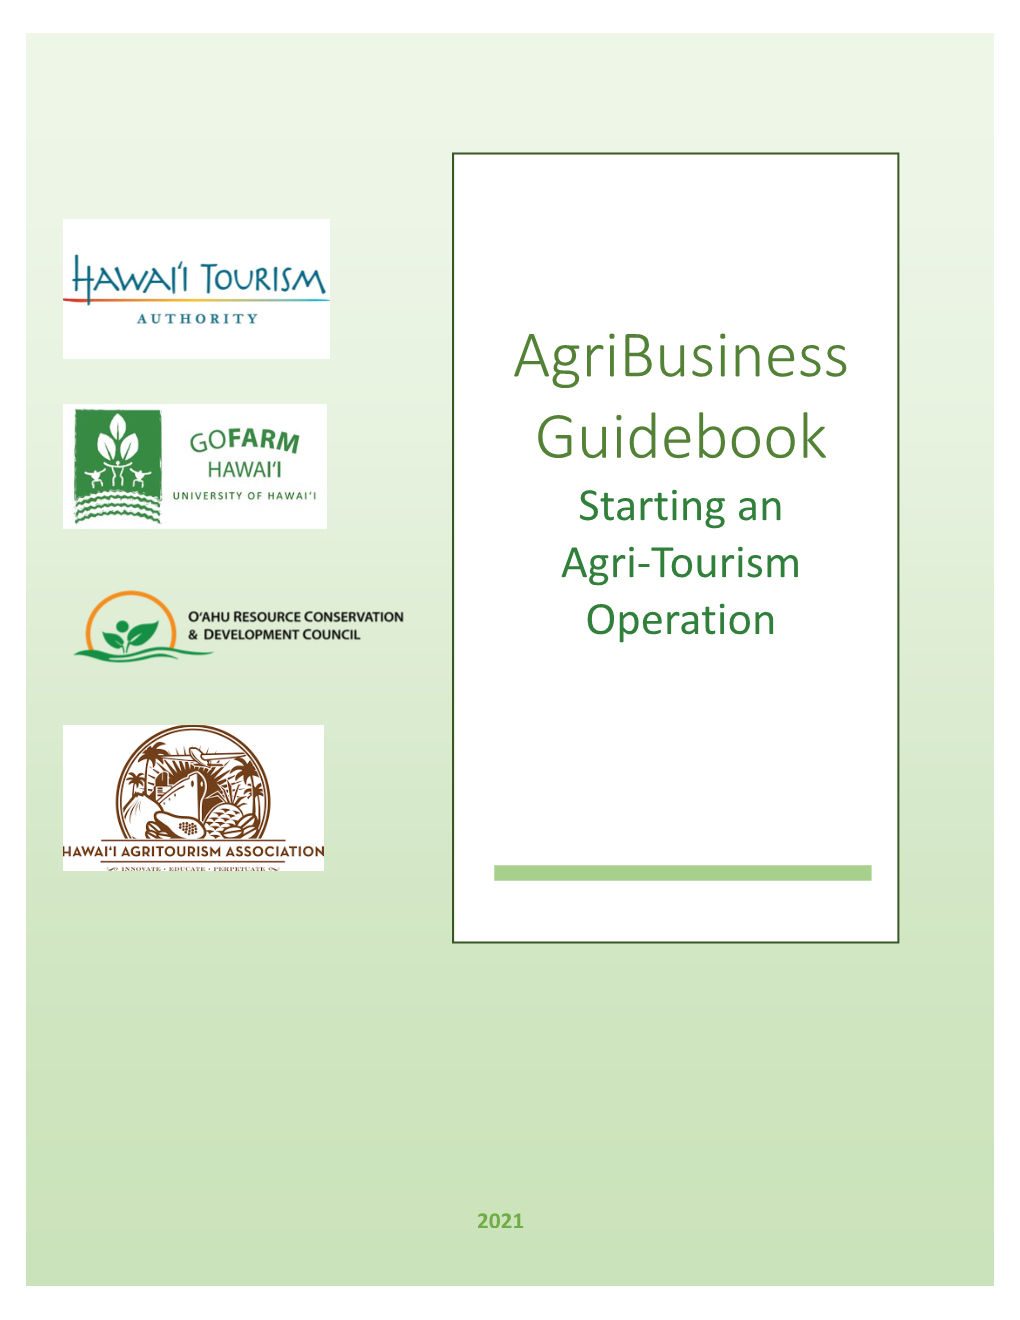 Hawaii Agribusiness Guidebook, Please Visit